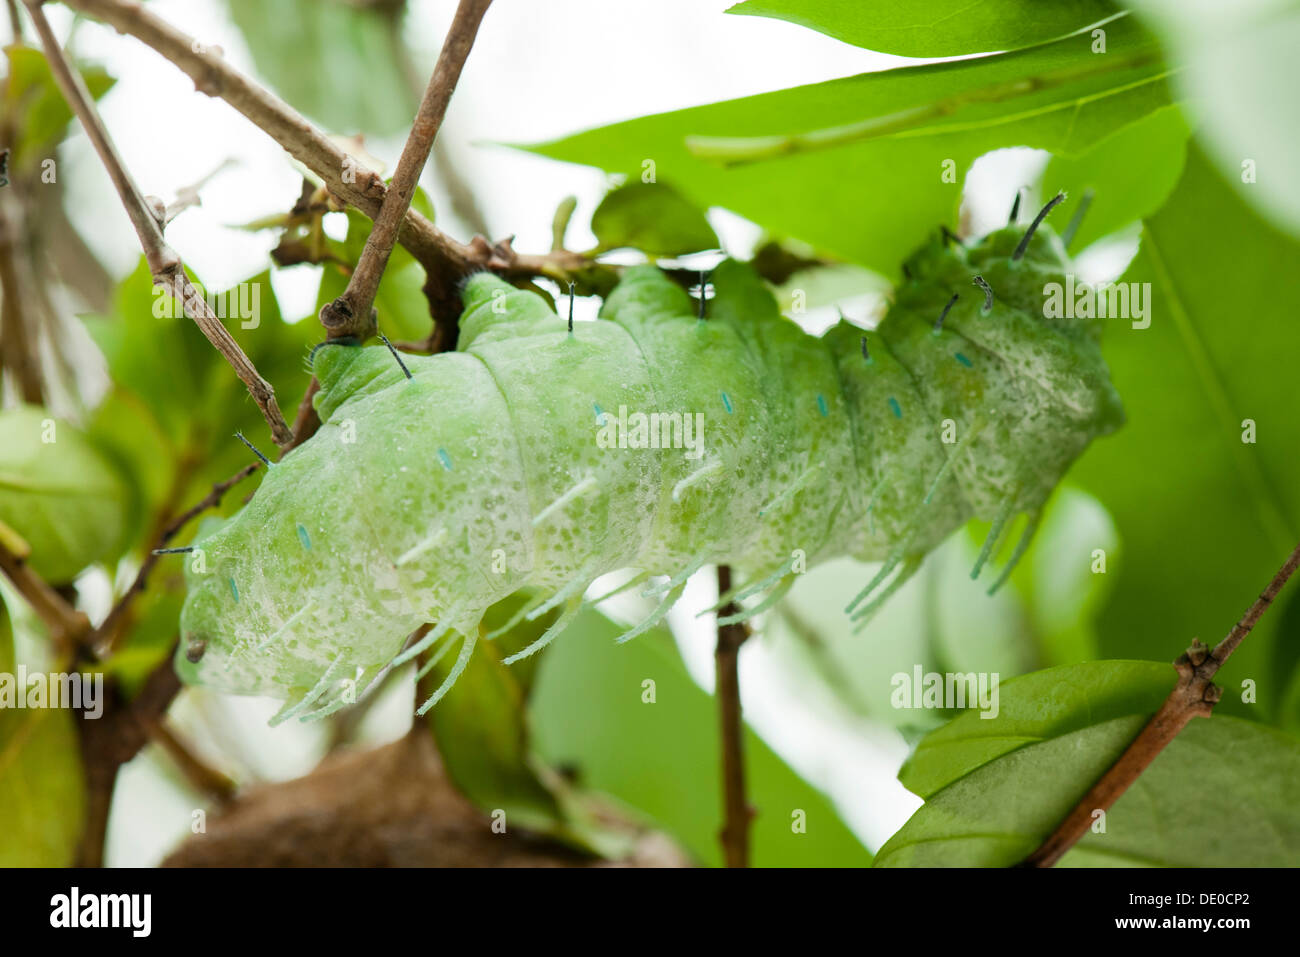 Caterpillar eating leaves Stock Photo